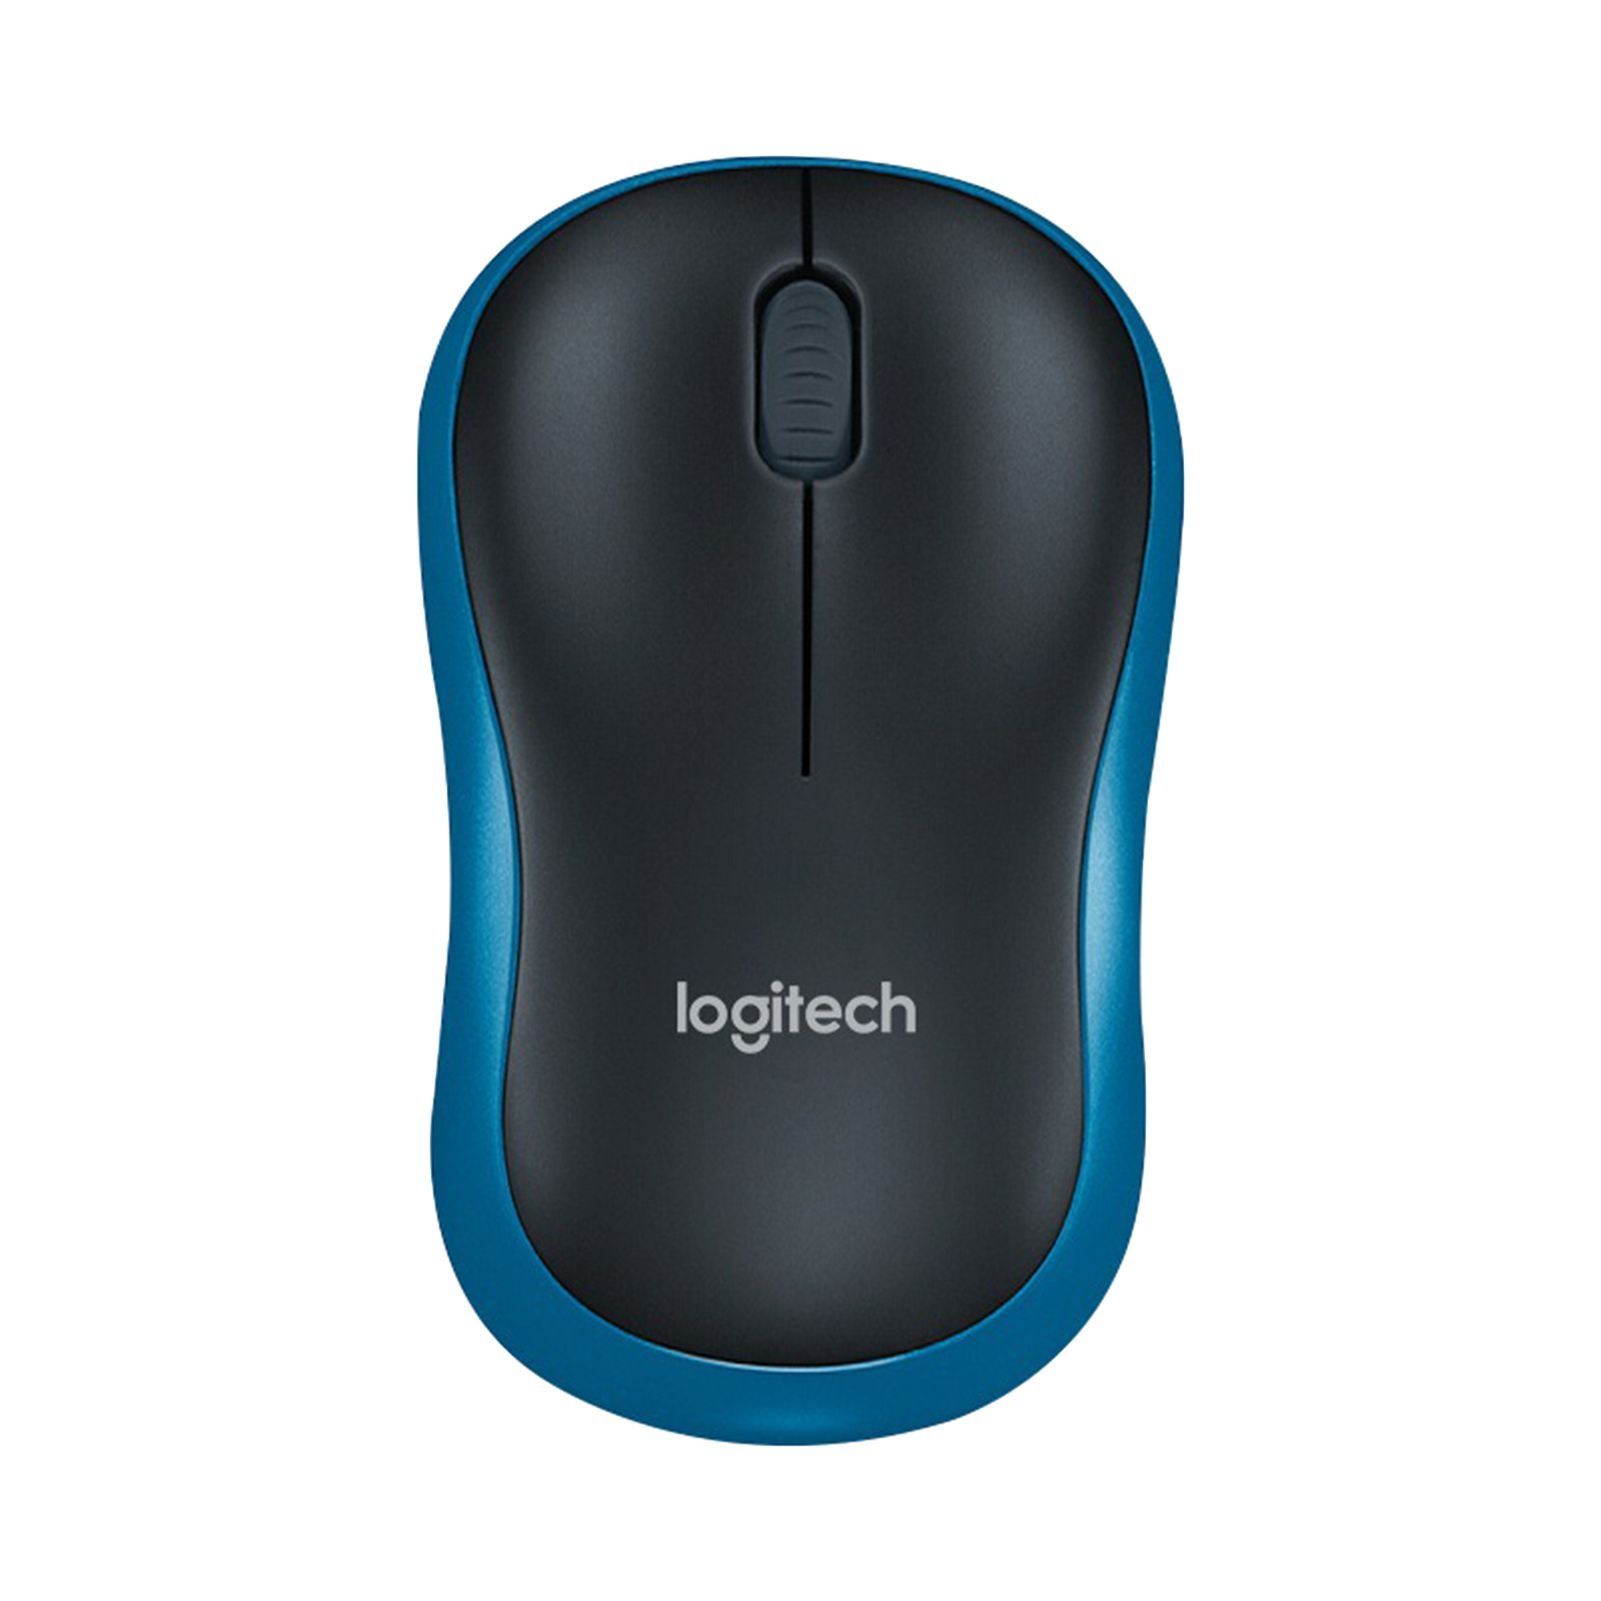 Беспроводные мыши спб. Мышь Logitech m185 Blue. Мышь Logitech m185 Red. Мышь Logitech 910-002239. Мышь Logitech m185 Grey/Black.